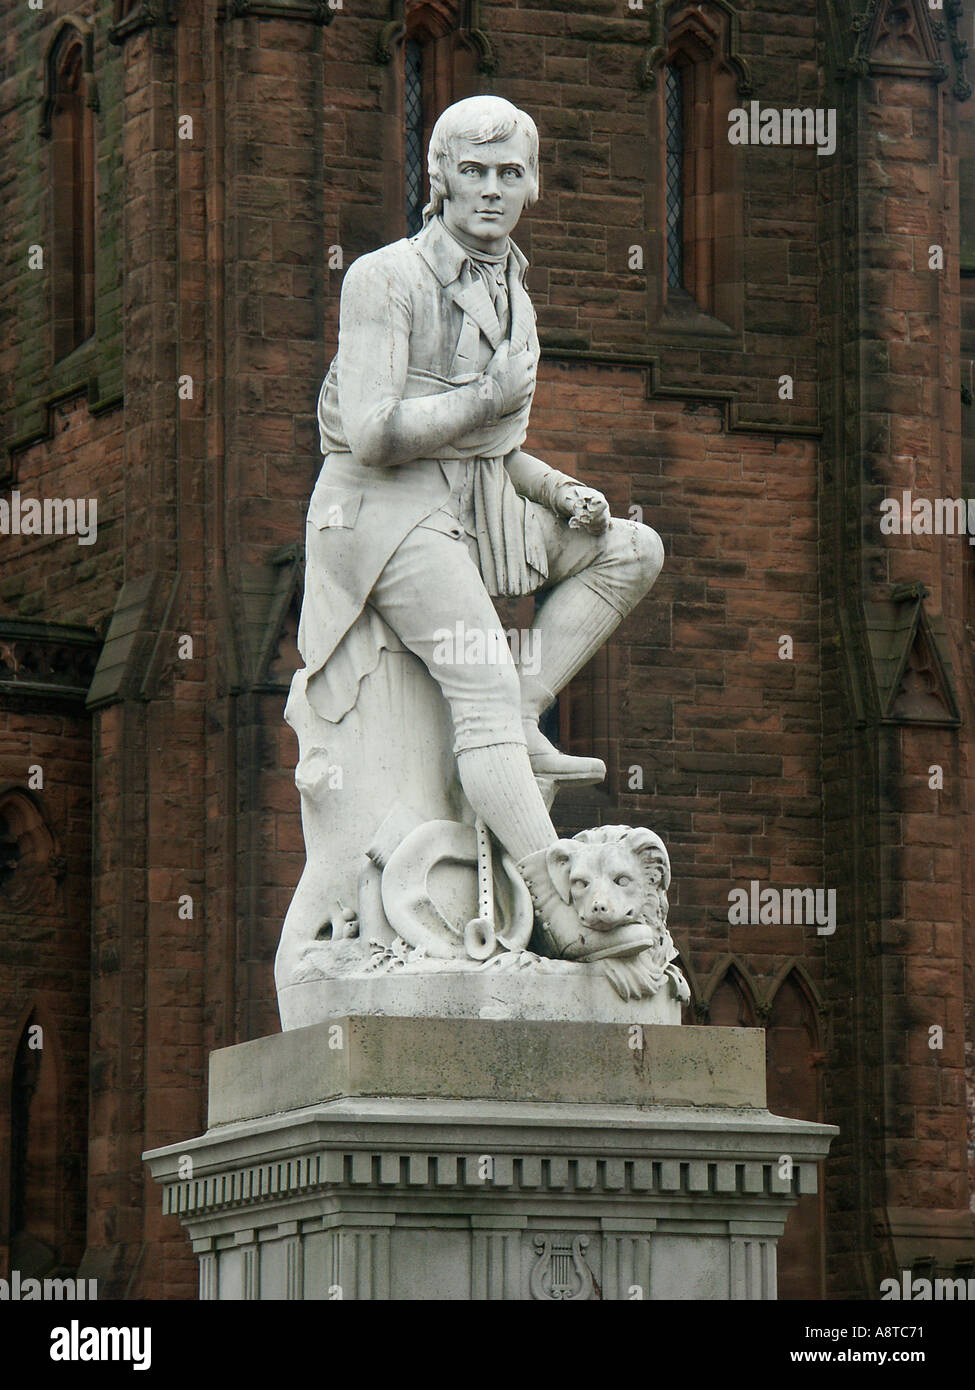 Statue de Robert Burns Dumfries Scotland UK Banque D'Images